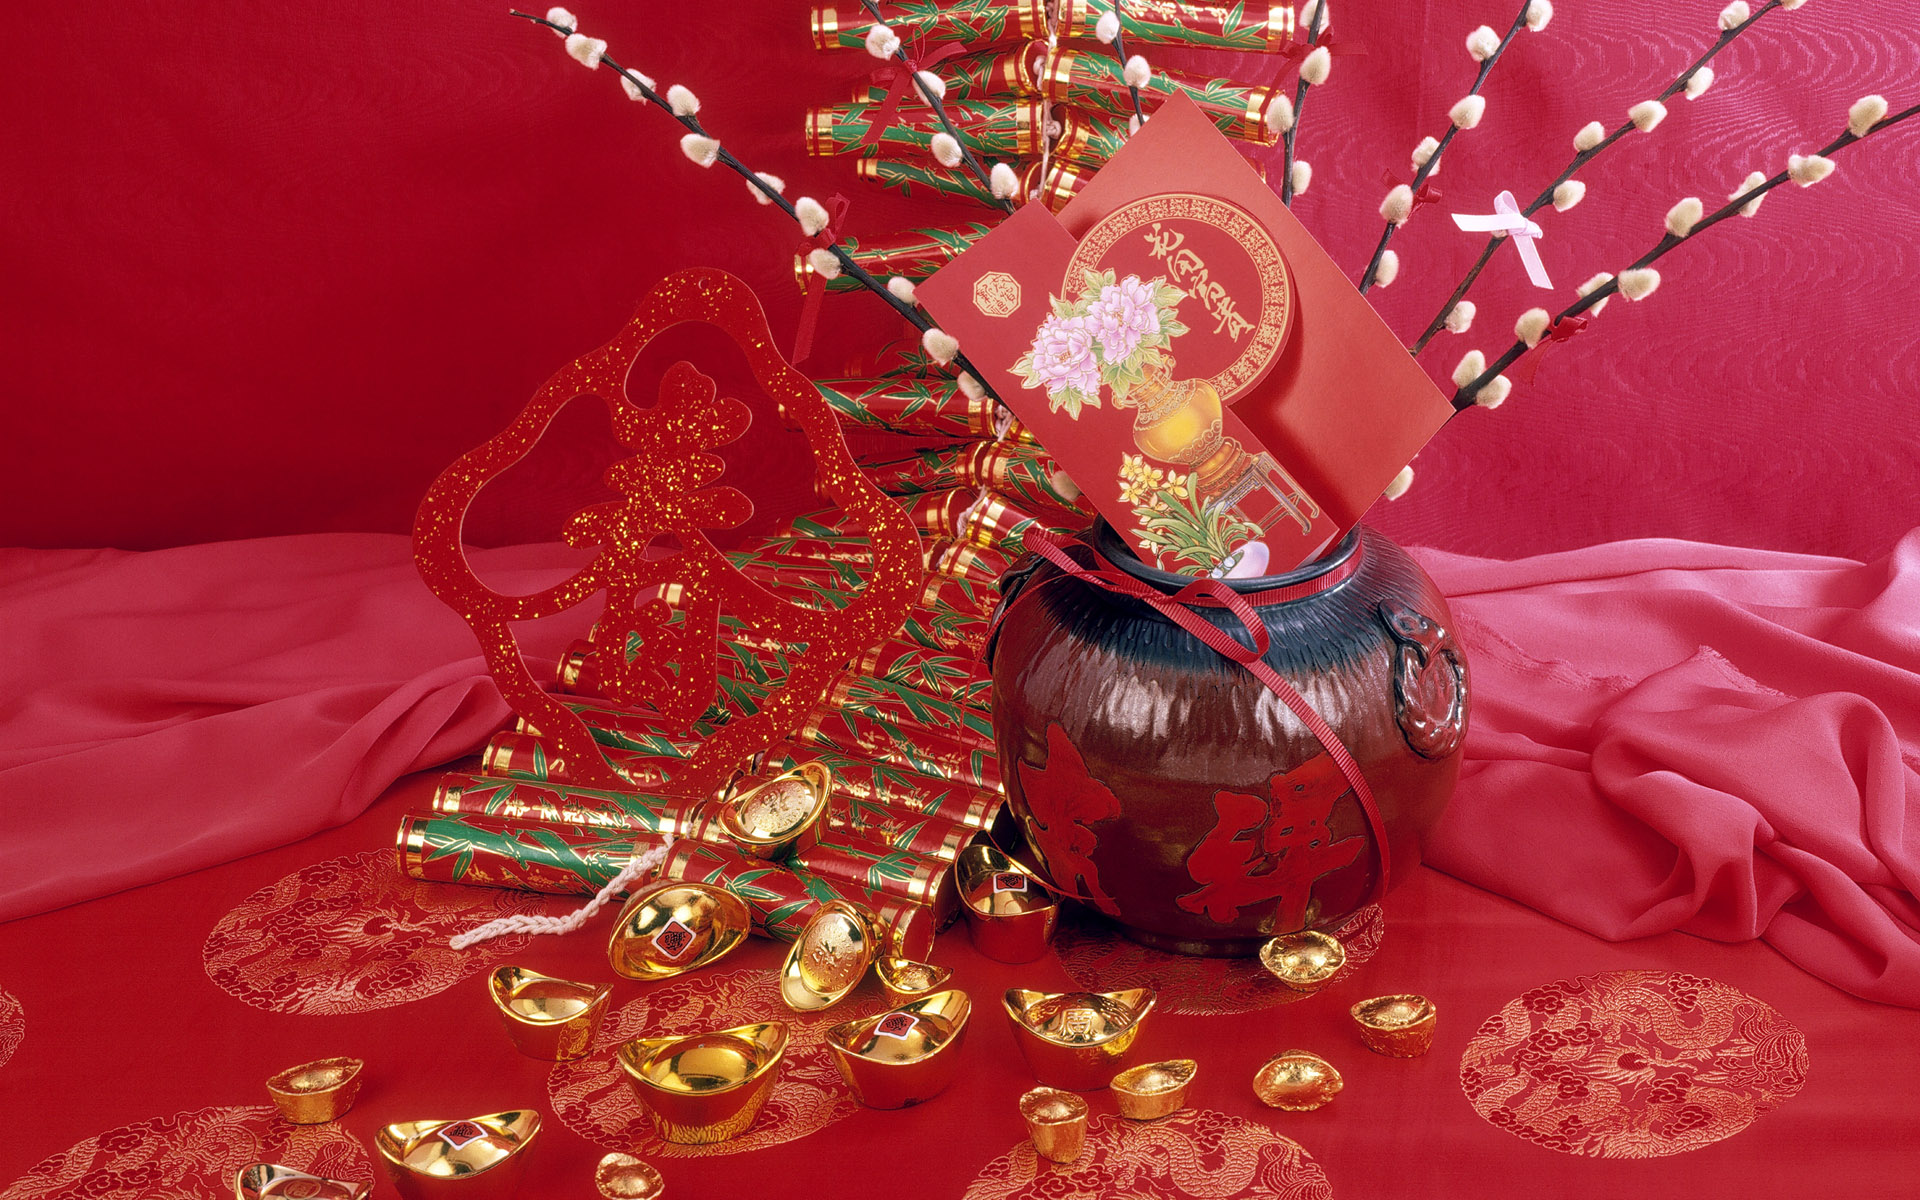 中国の新年の壁紙,赤,静物,目玉,静物写真,結晶